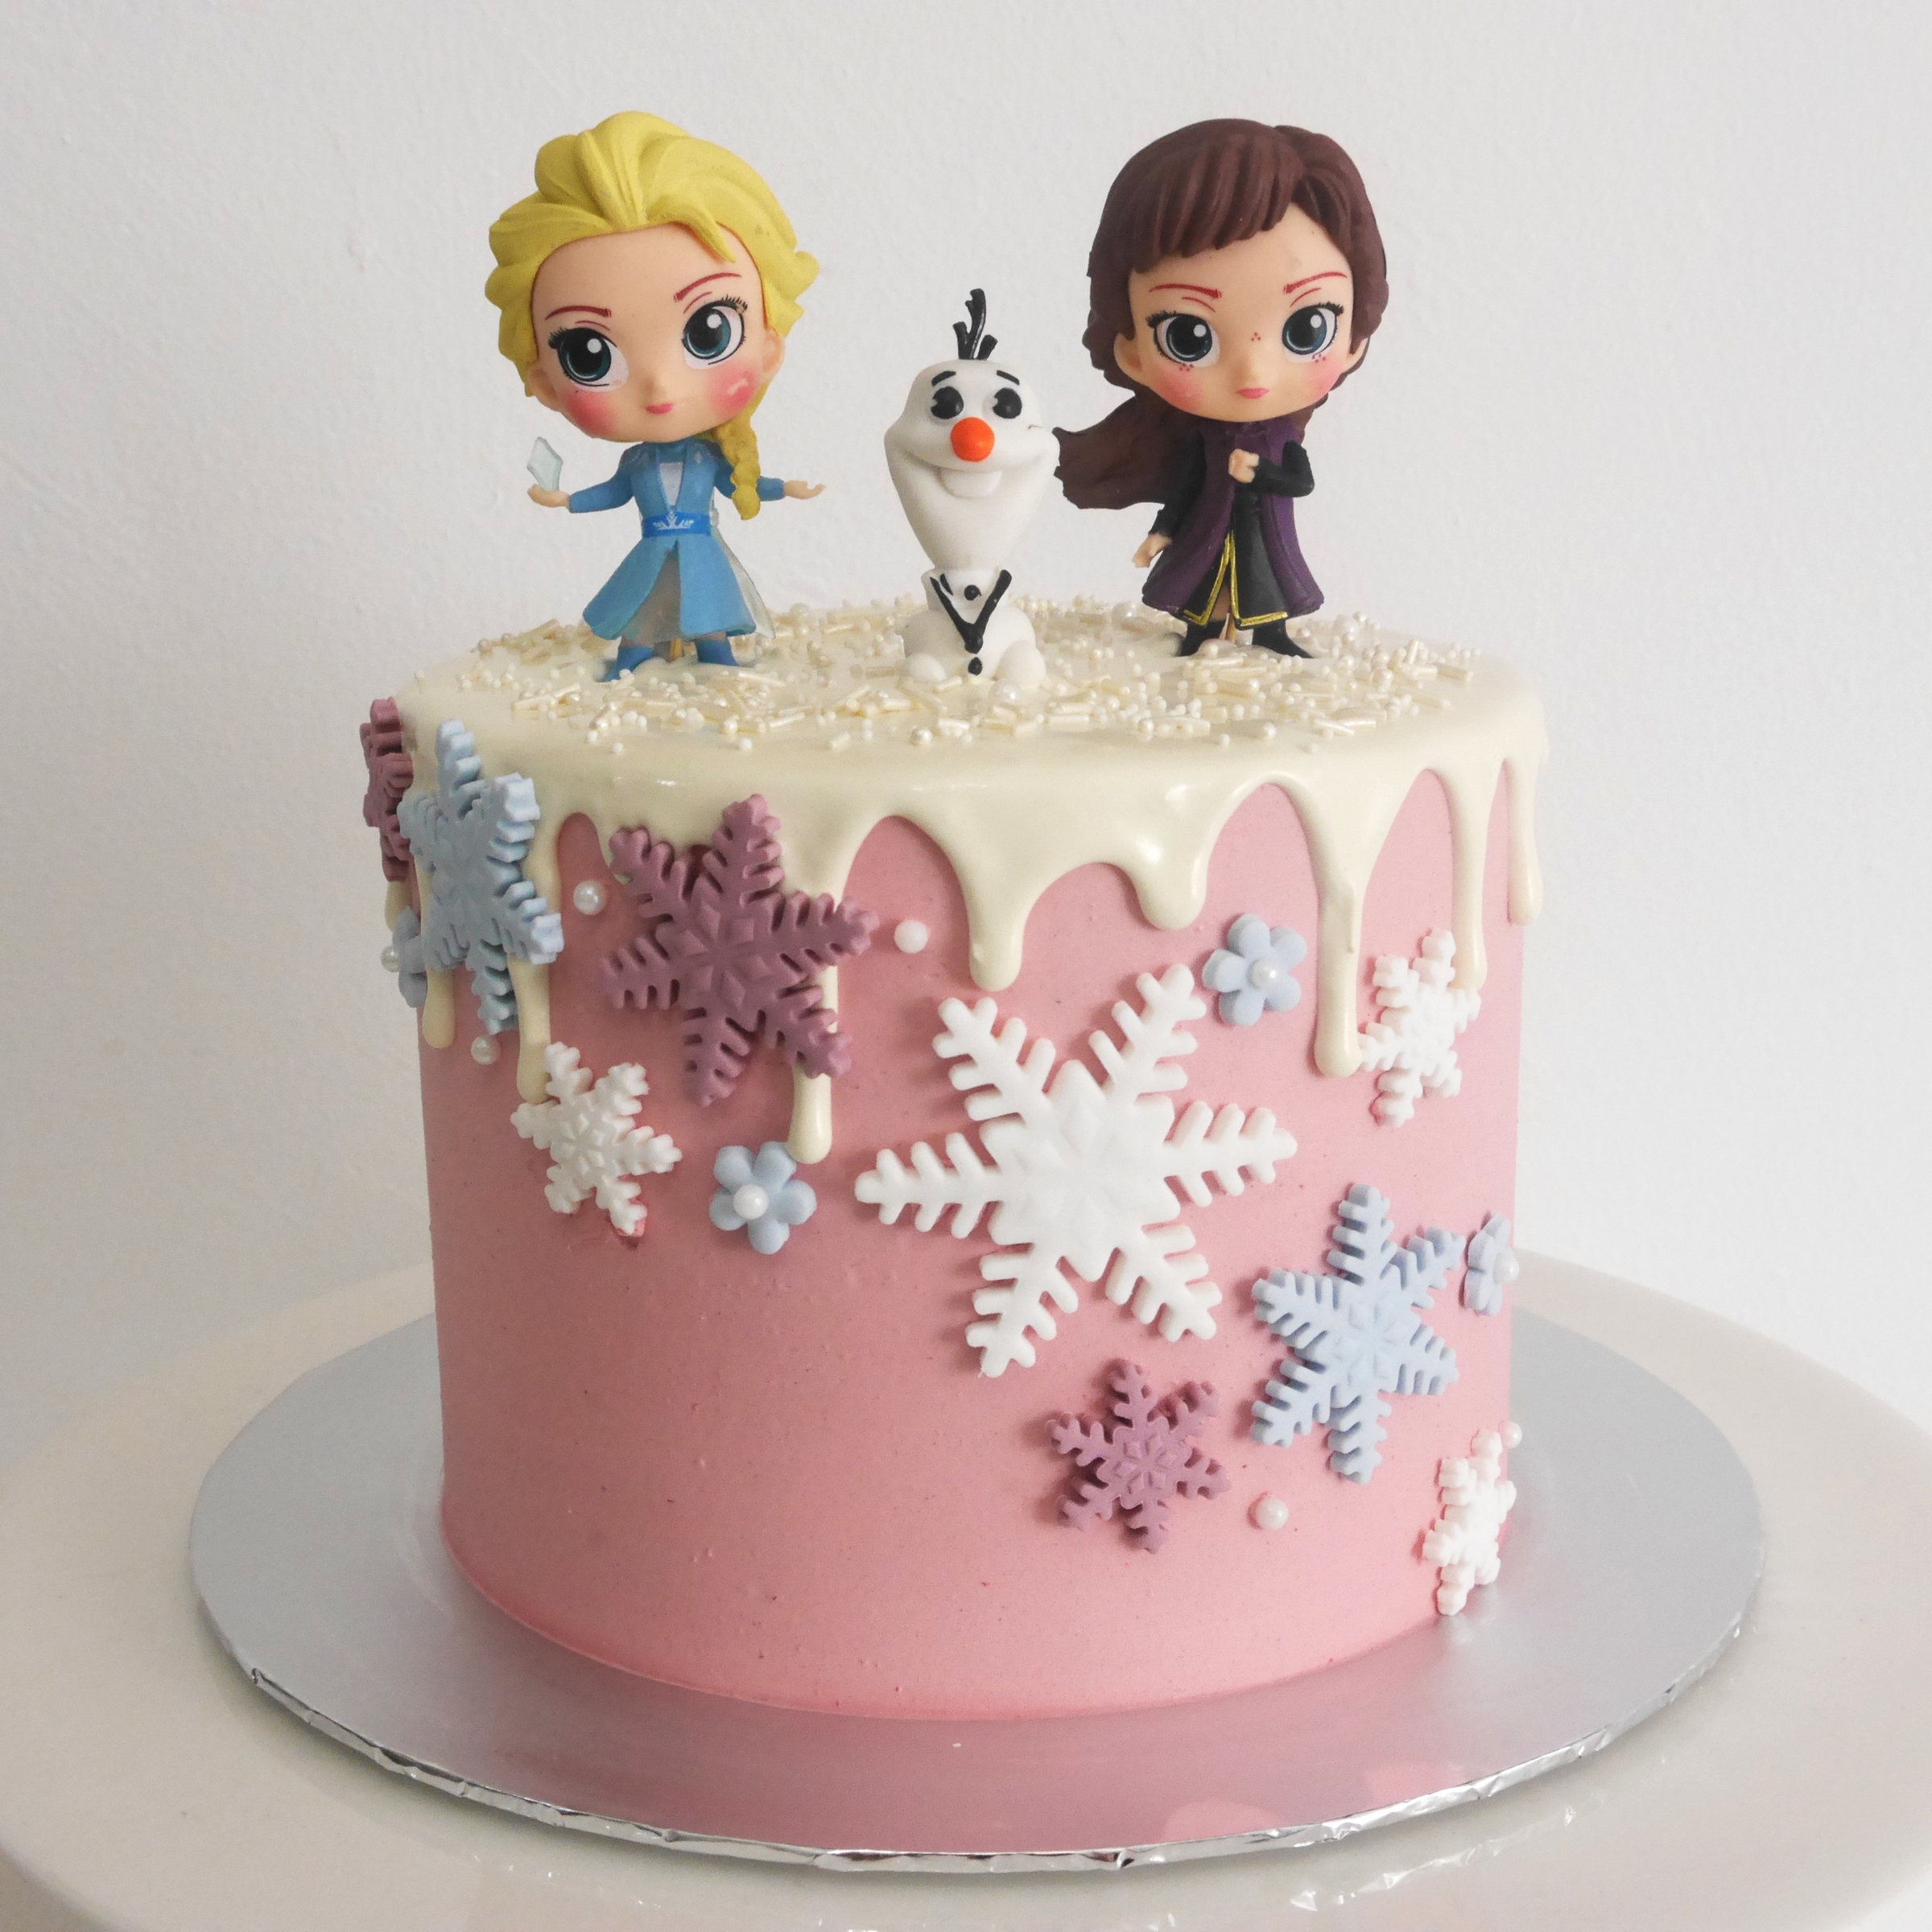 Frozen - Alsa and Anna Theme Cake - Avon Bakers